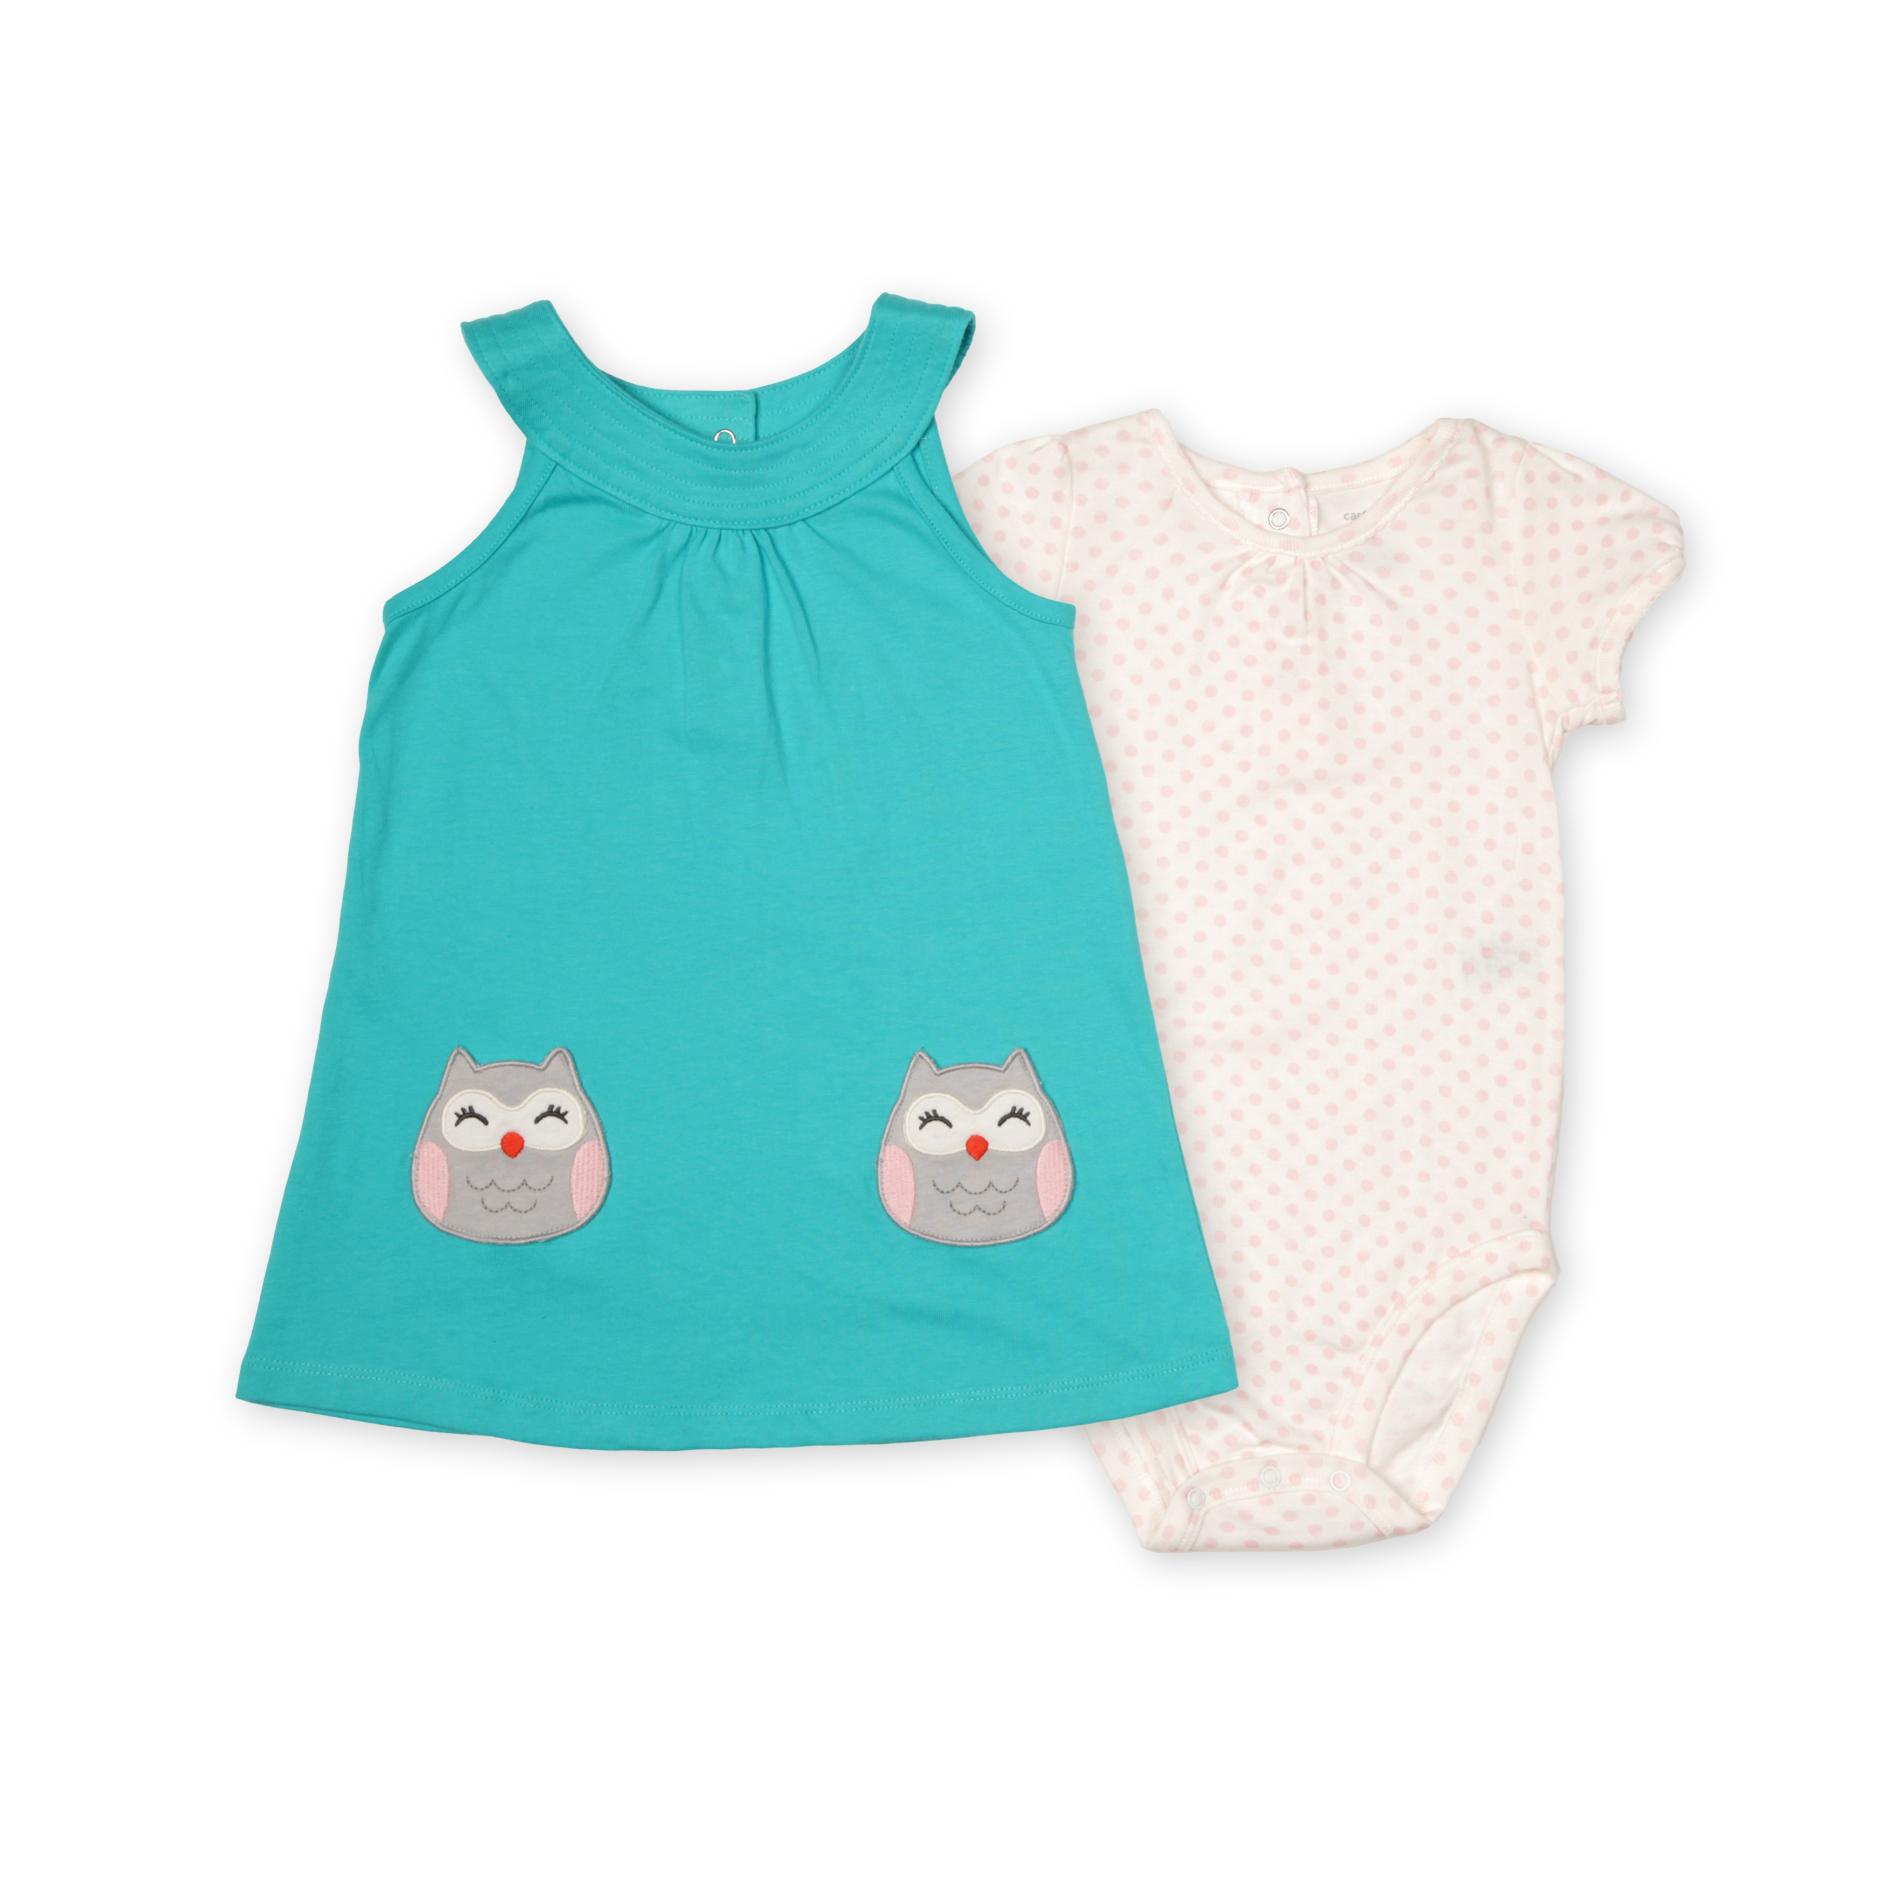 Carter's Newborn & Infant Girl's 2-Piece Jumper Outfit - Owl